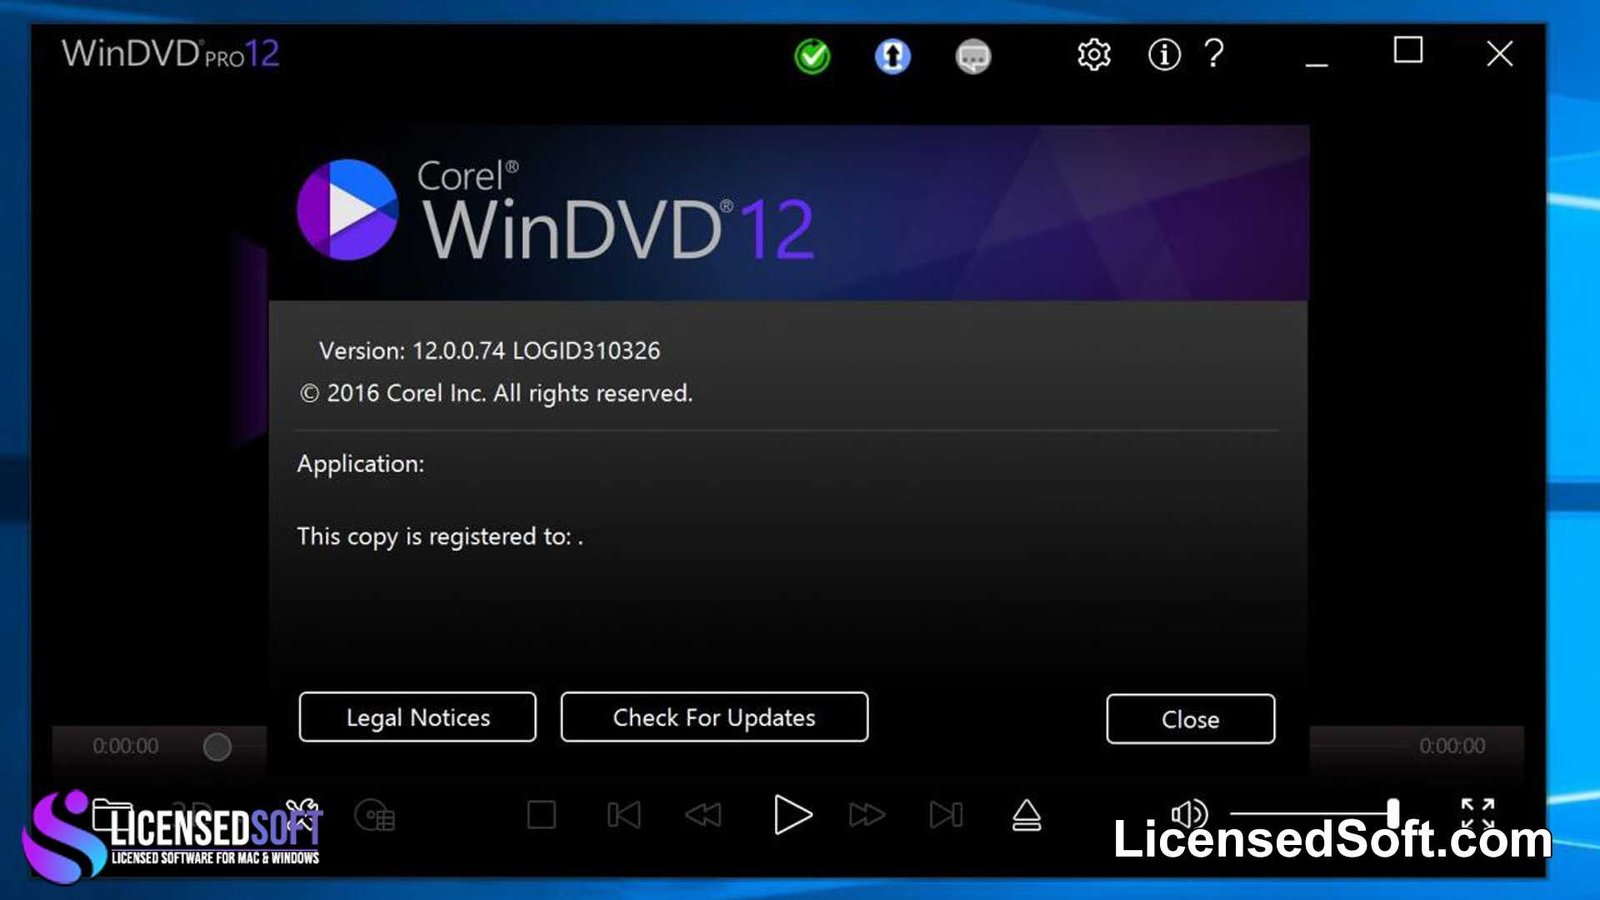 Corel WinDVD Pro 12 Full Premium By LicensedSoft